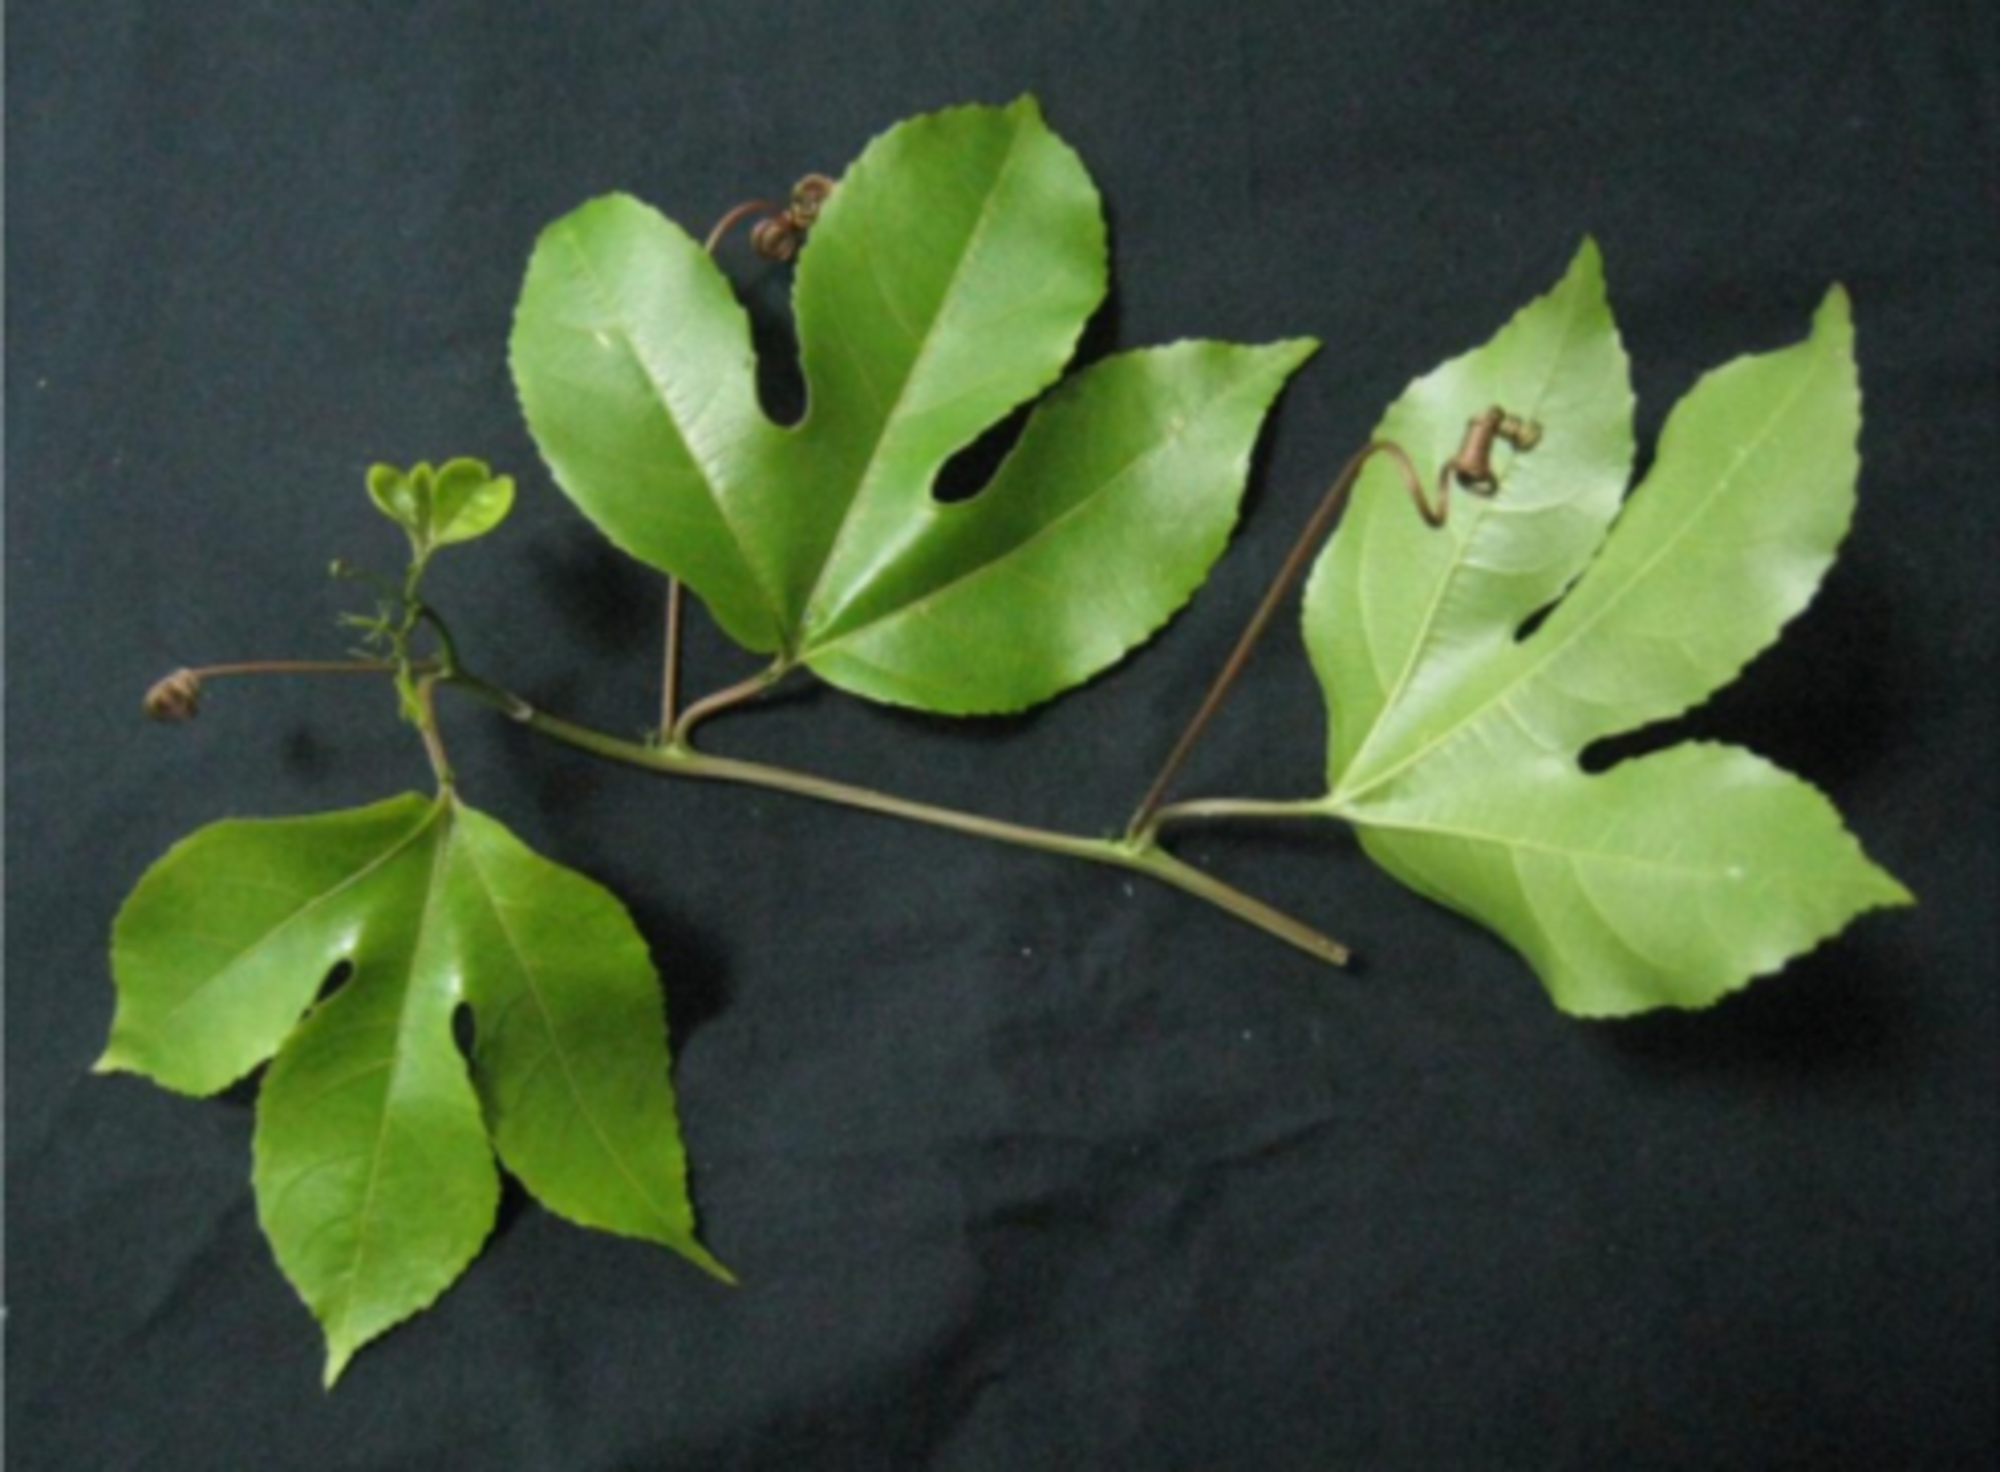 Passiflora edulis leaves. Source: Wijeratnam (2016)